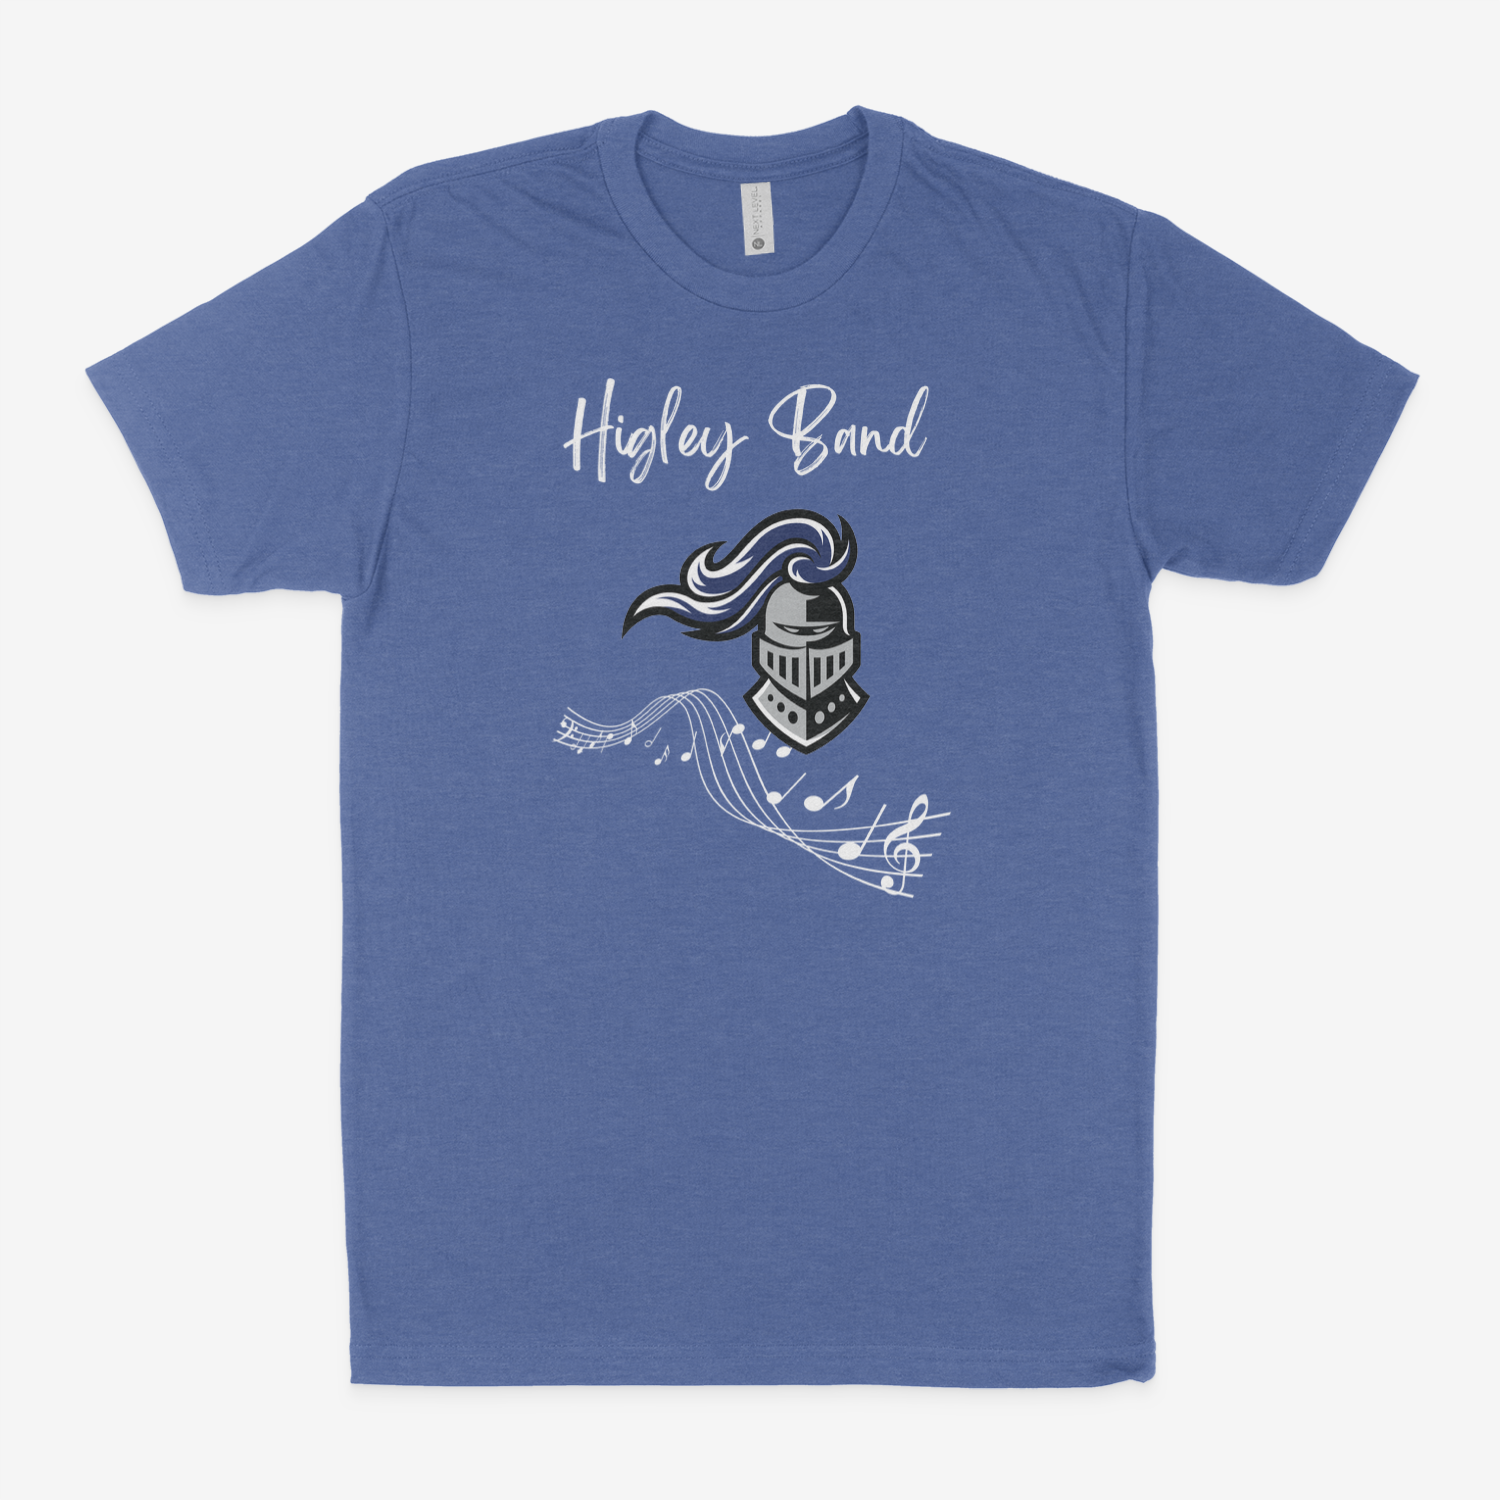 Higley Band T-Shirt - Parent